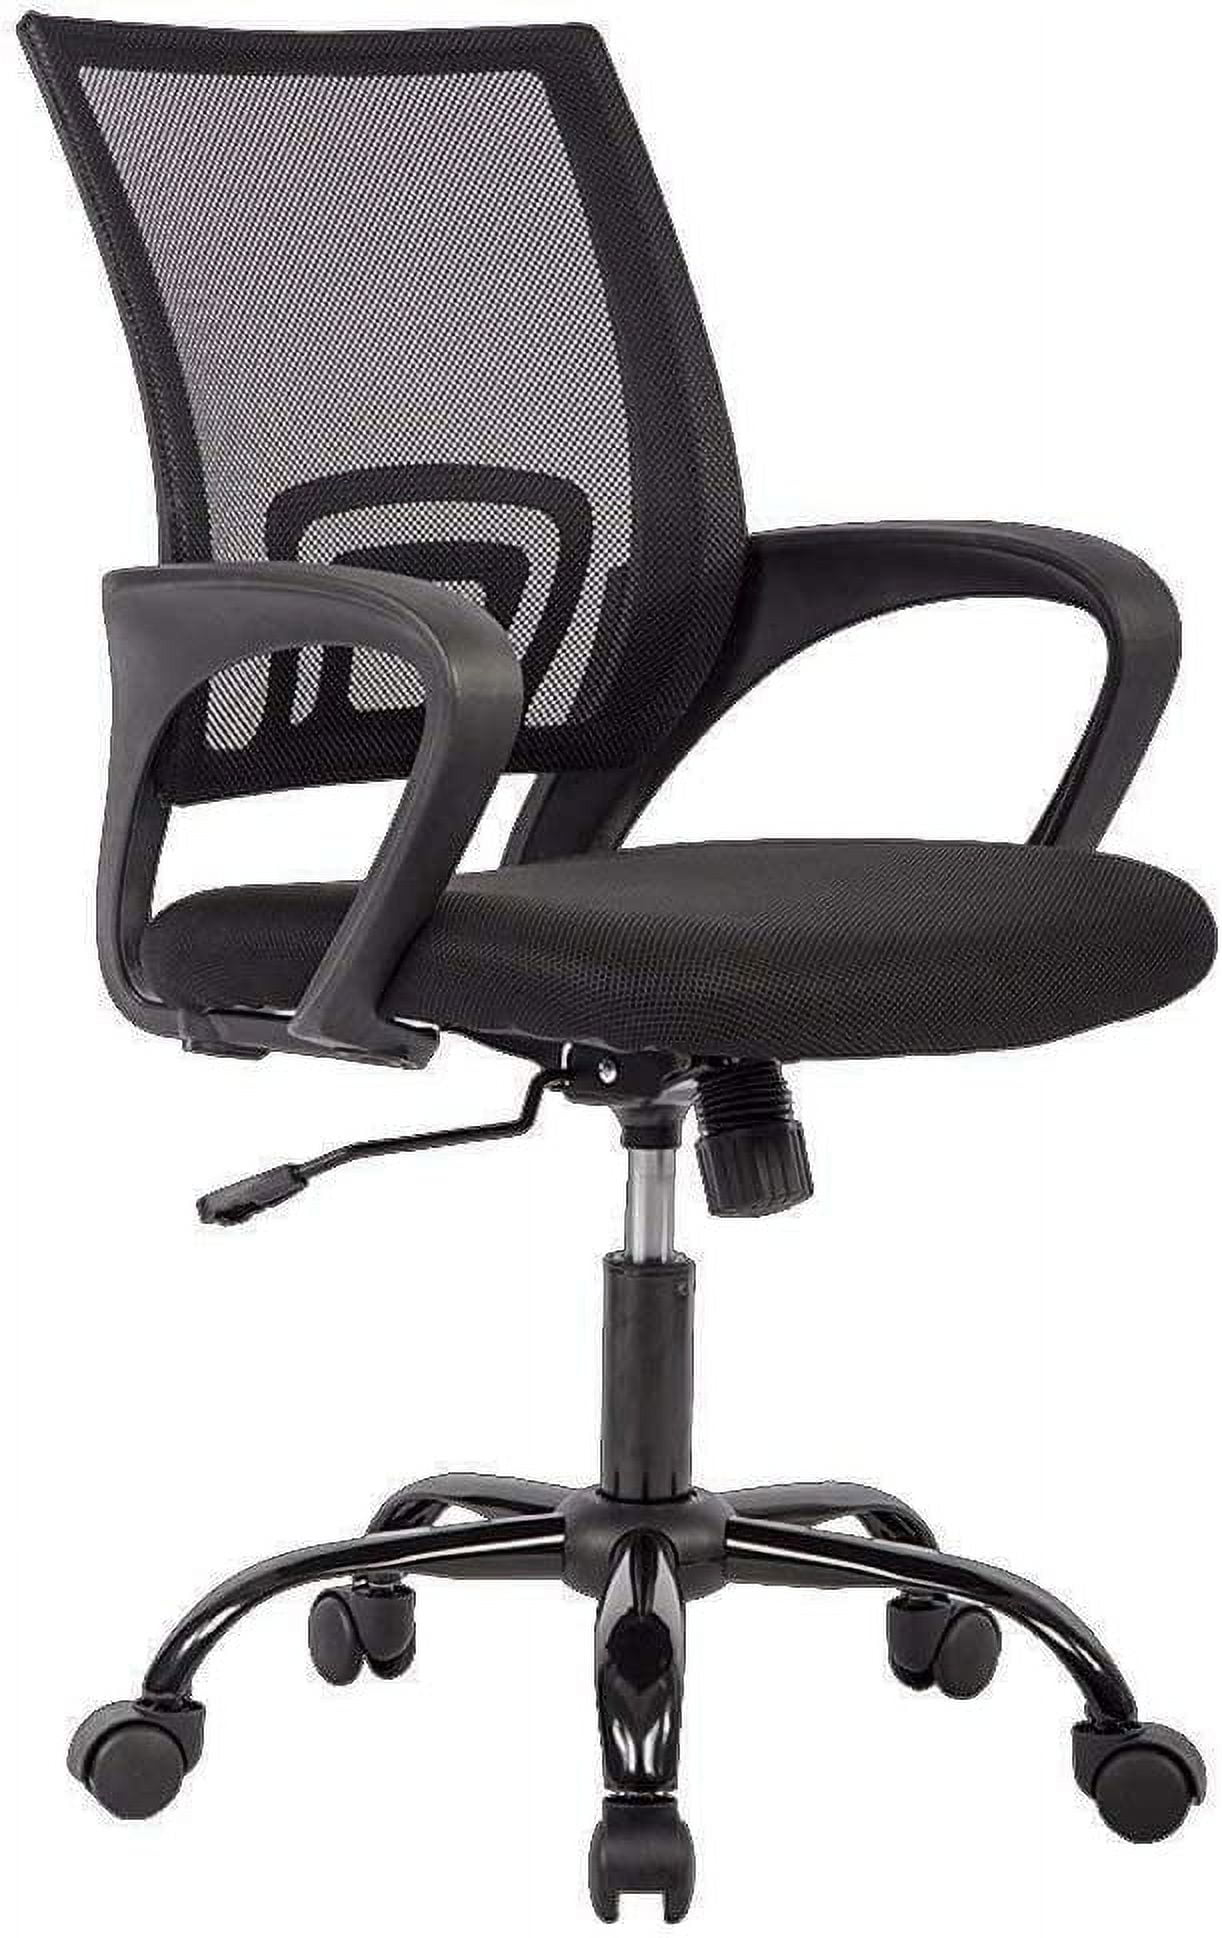 BestOffice Mesh Office Chair Desk Chair Computer Chair Ergonomic Adjustable Stool Back Support Modern Executive Rolling Swivel Chair for Women & Men, Black